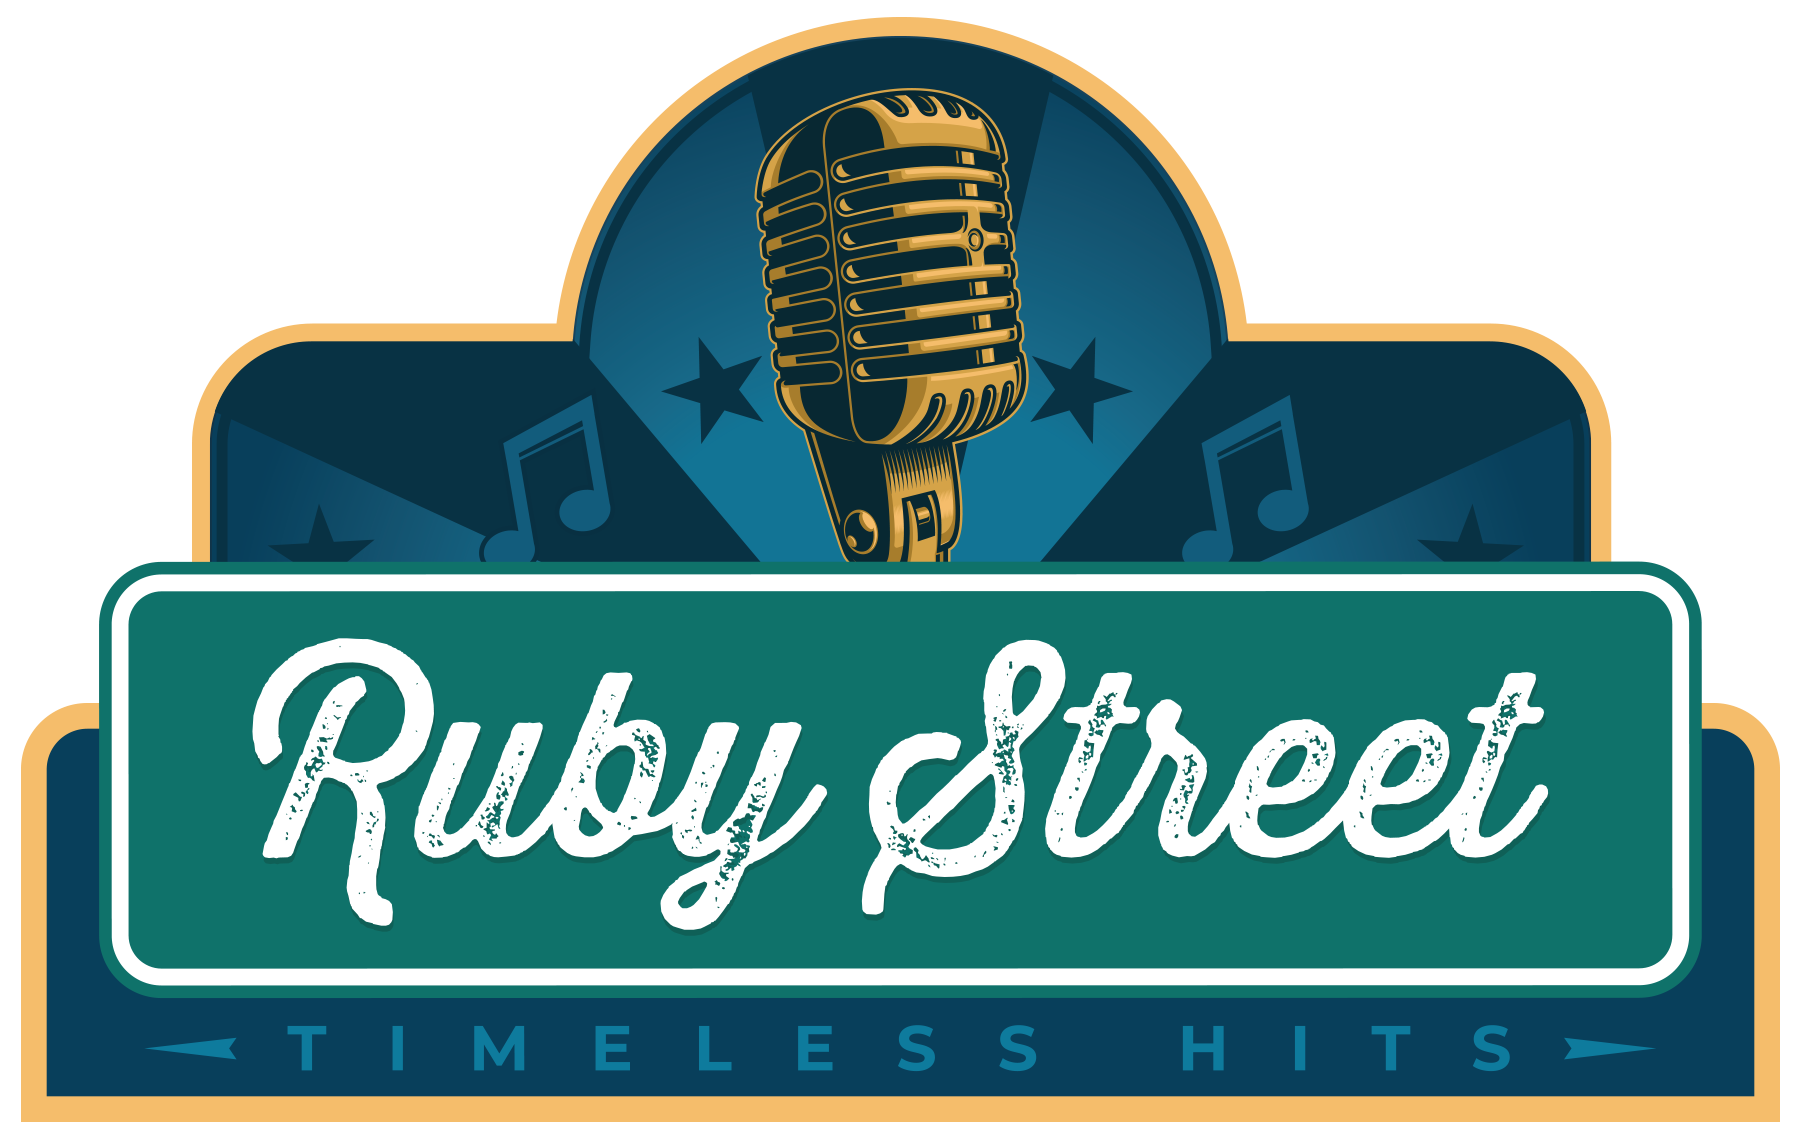 Ruby Street